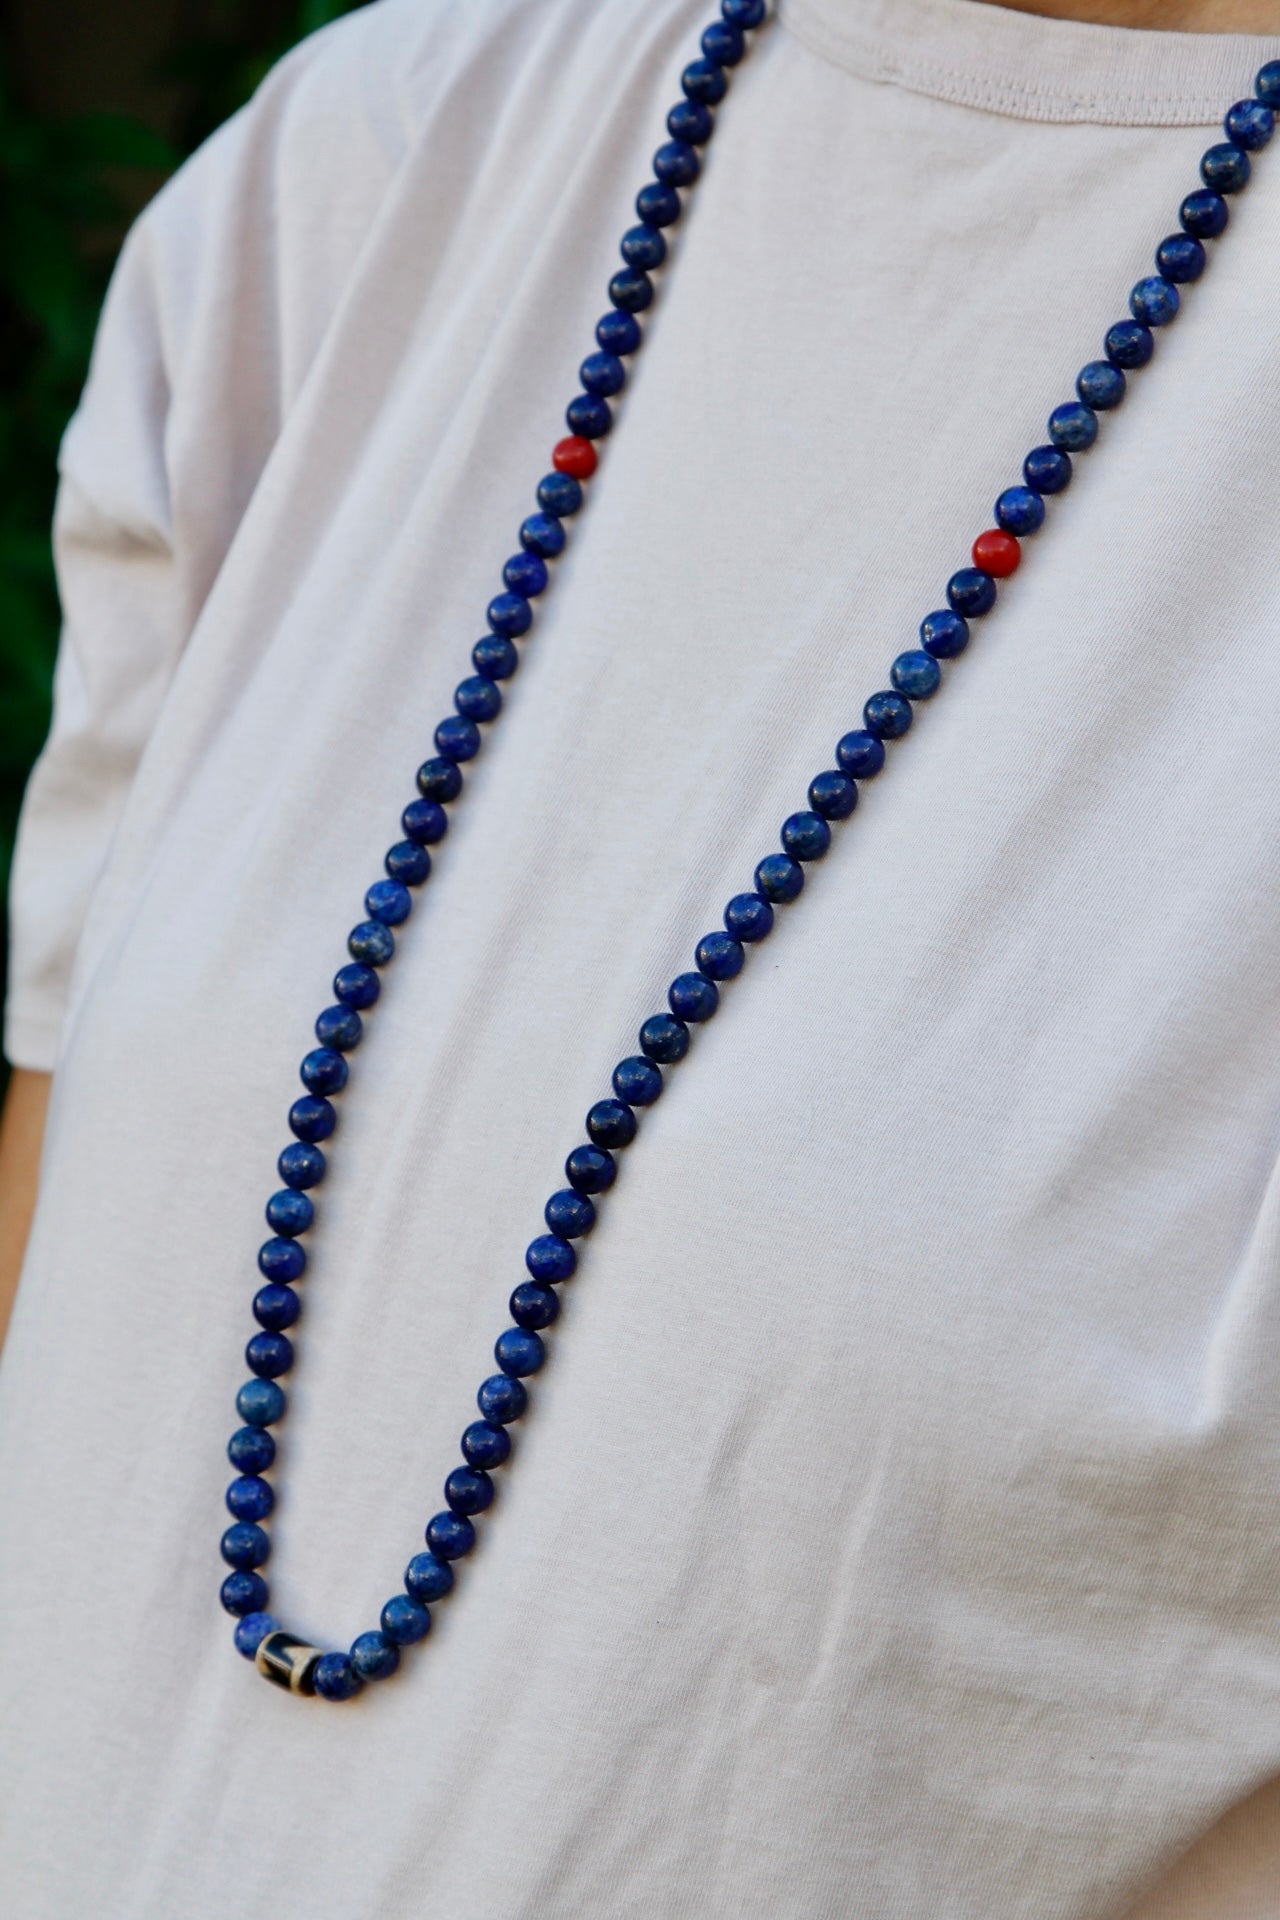 lapis mala worn around neck in portrait mode to show length